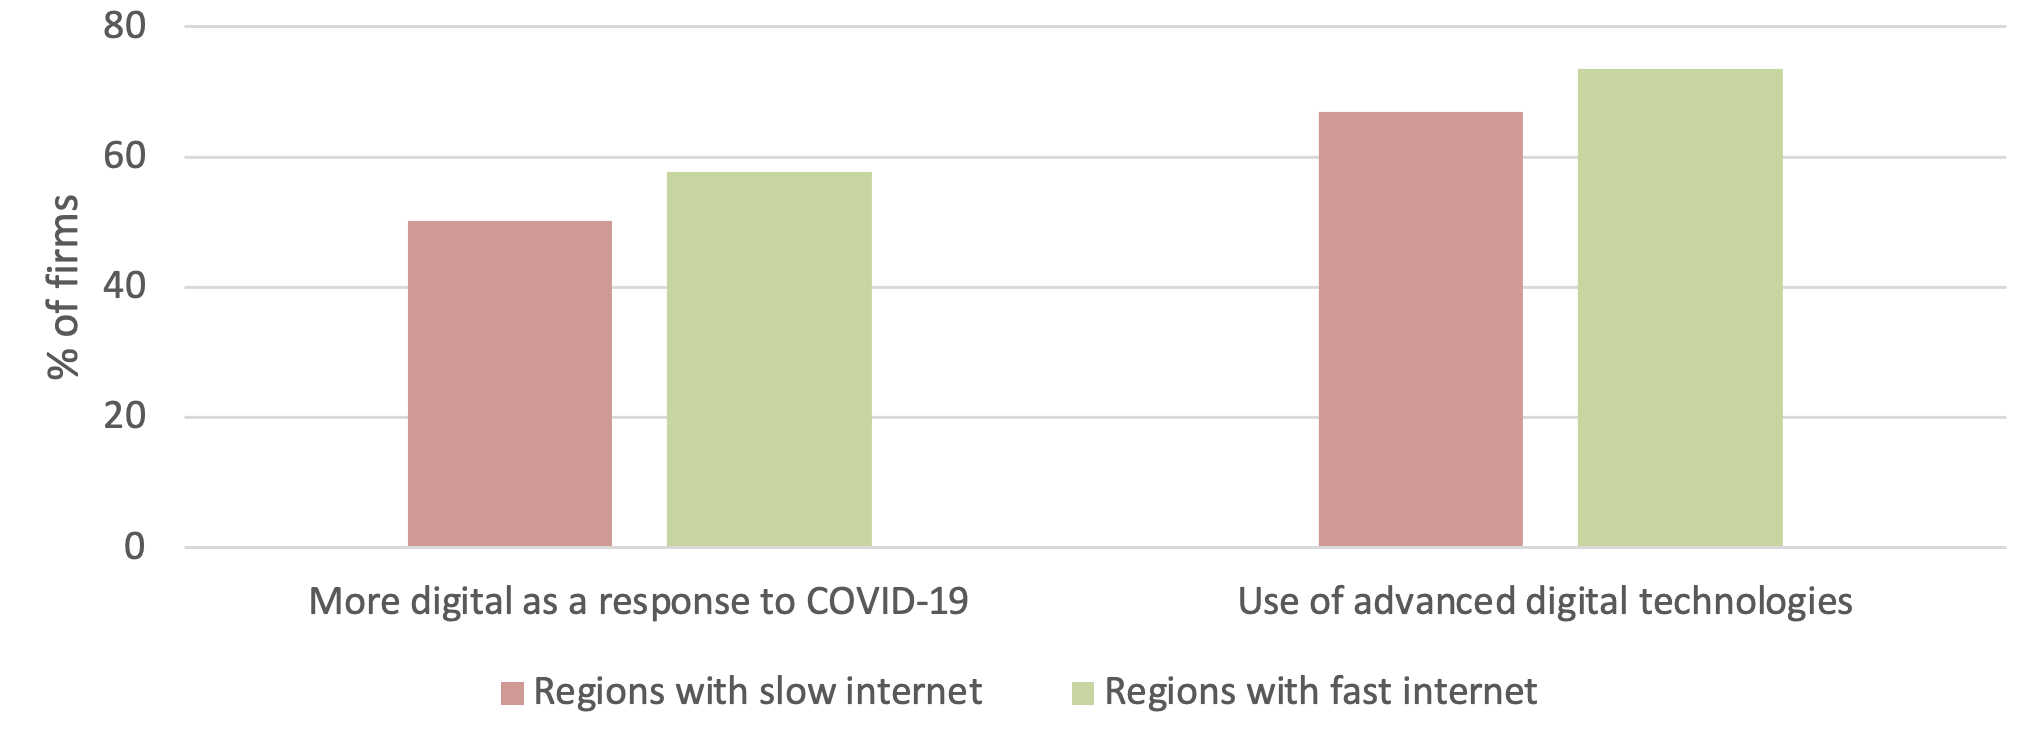 Figure 4 Regional internet speed and digital adoption